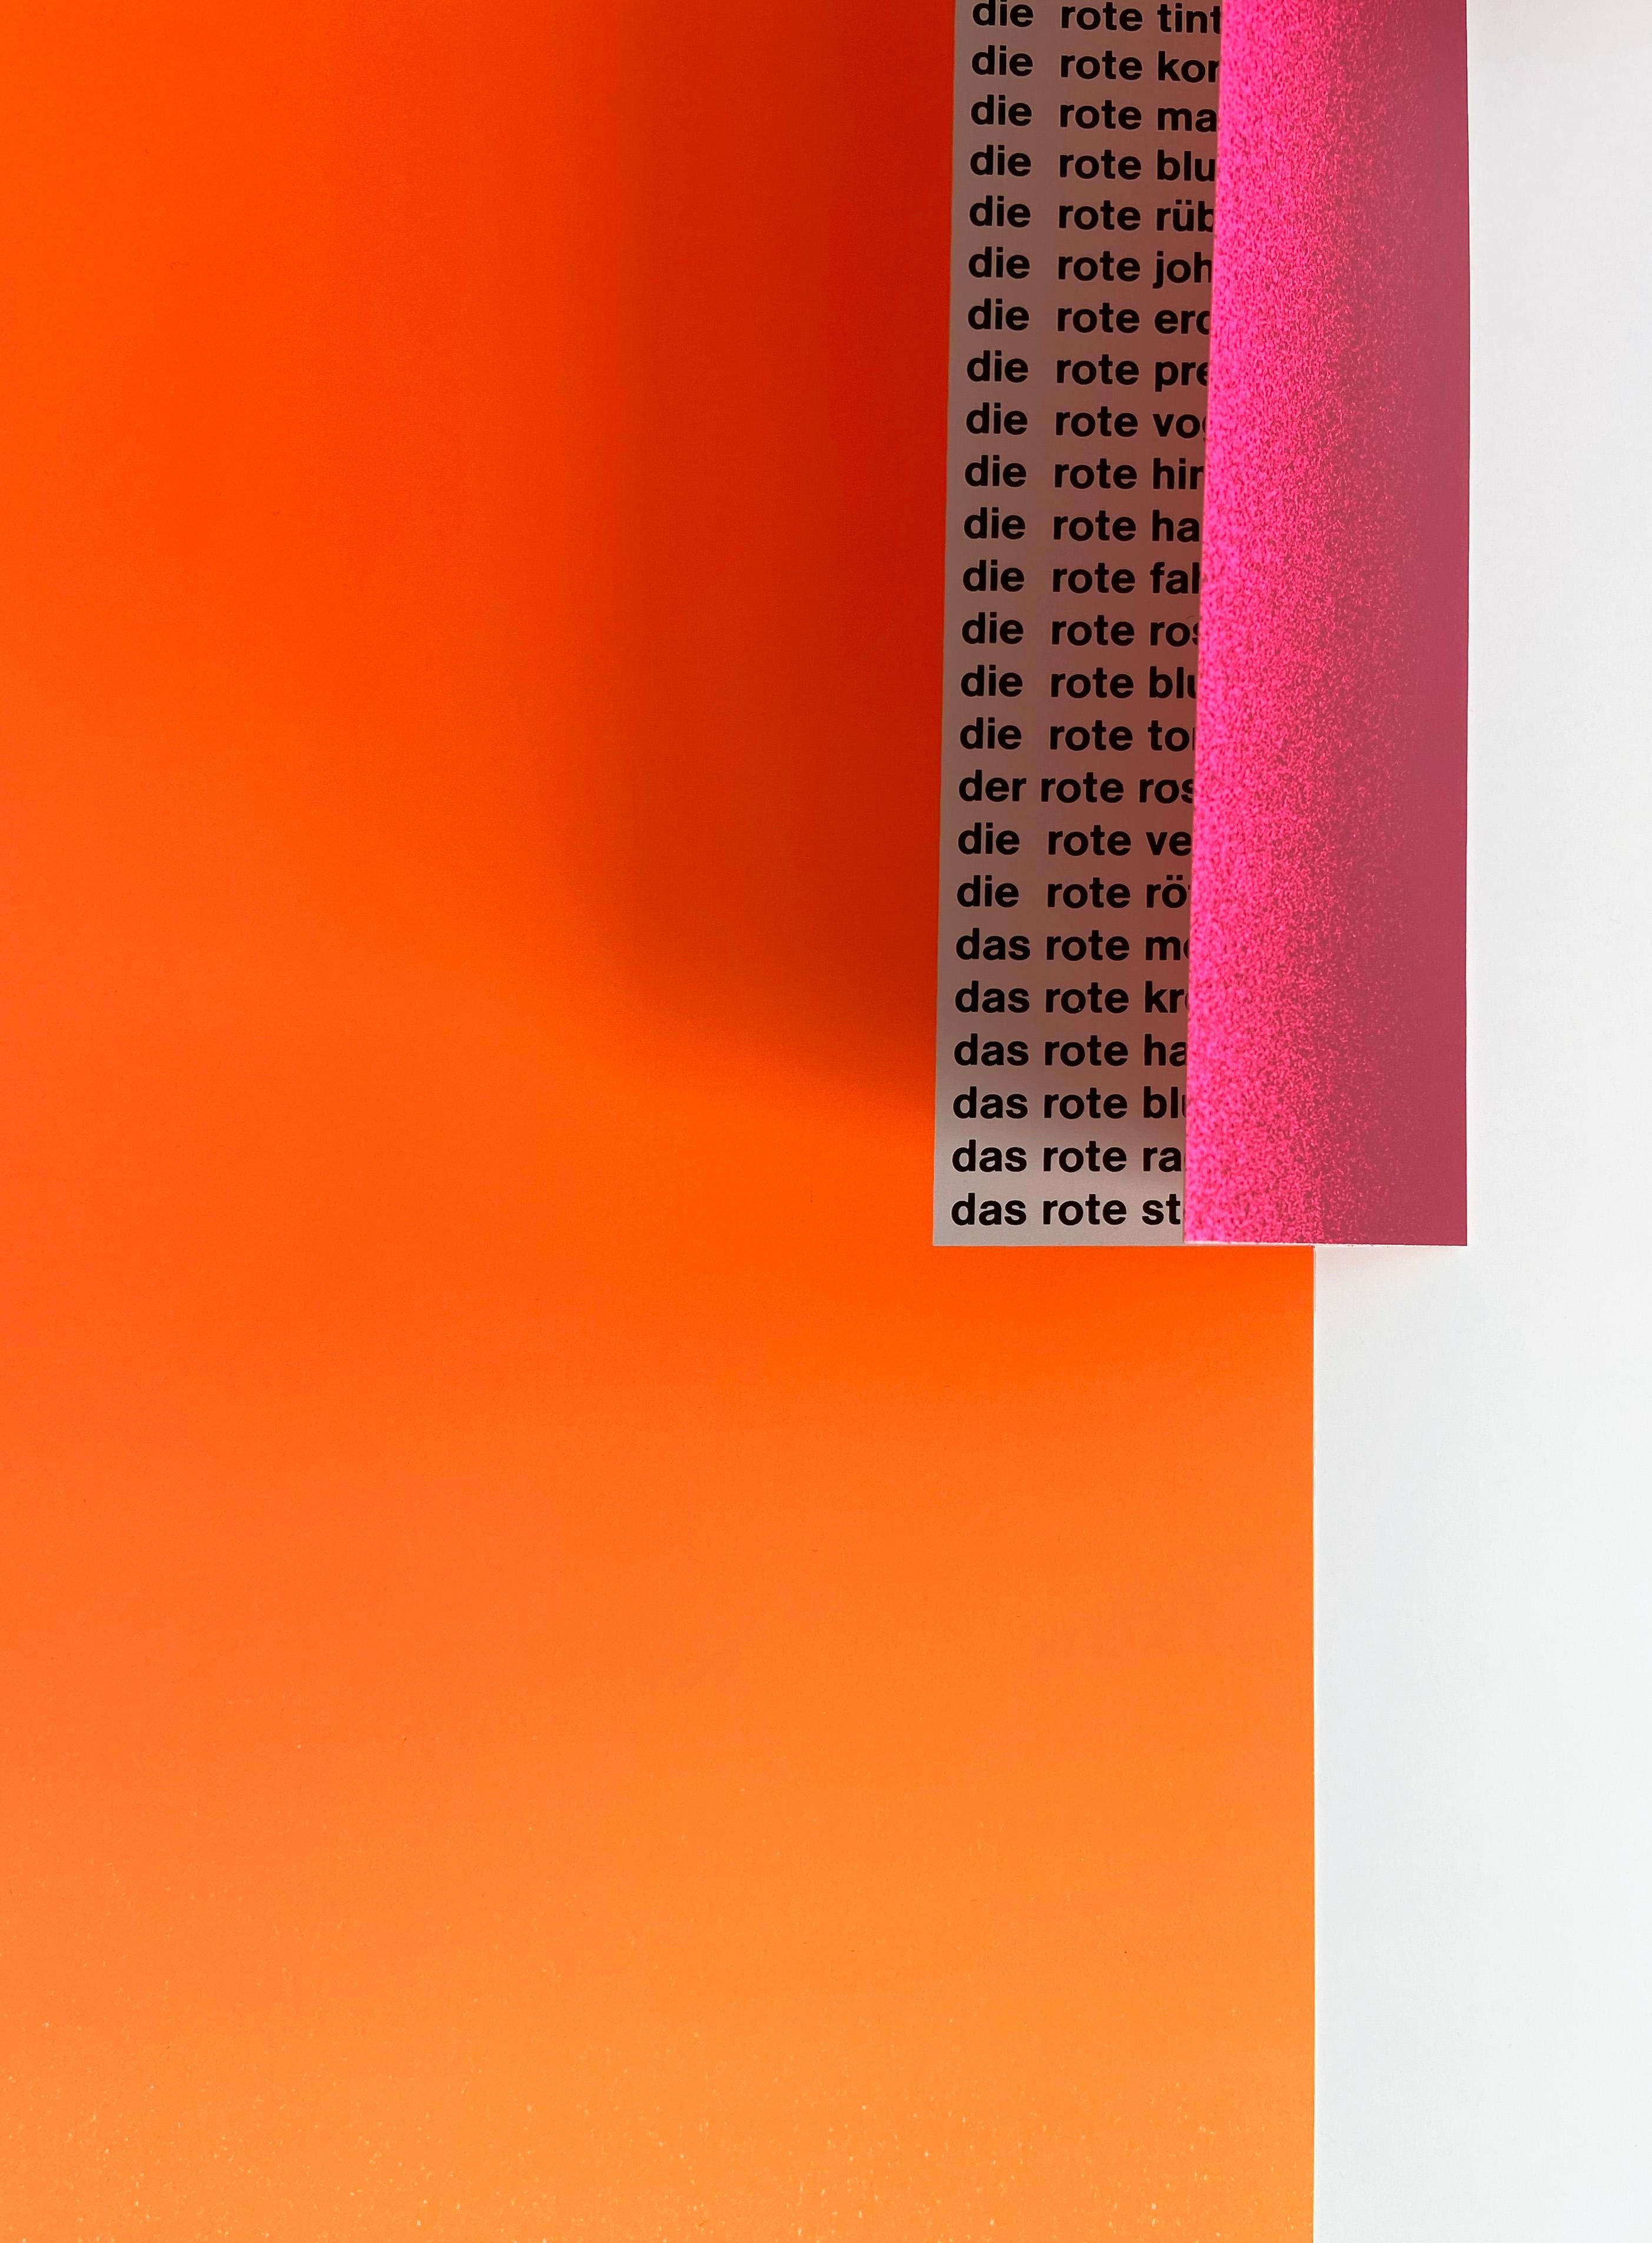 Rupprecht Geiger - Cold Reds on Orange, Screenprint, Abstract Art, Signed Print 1